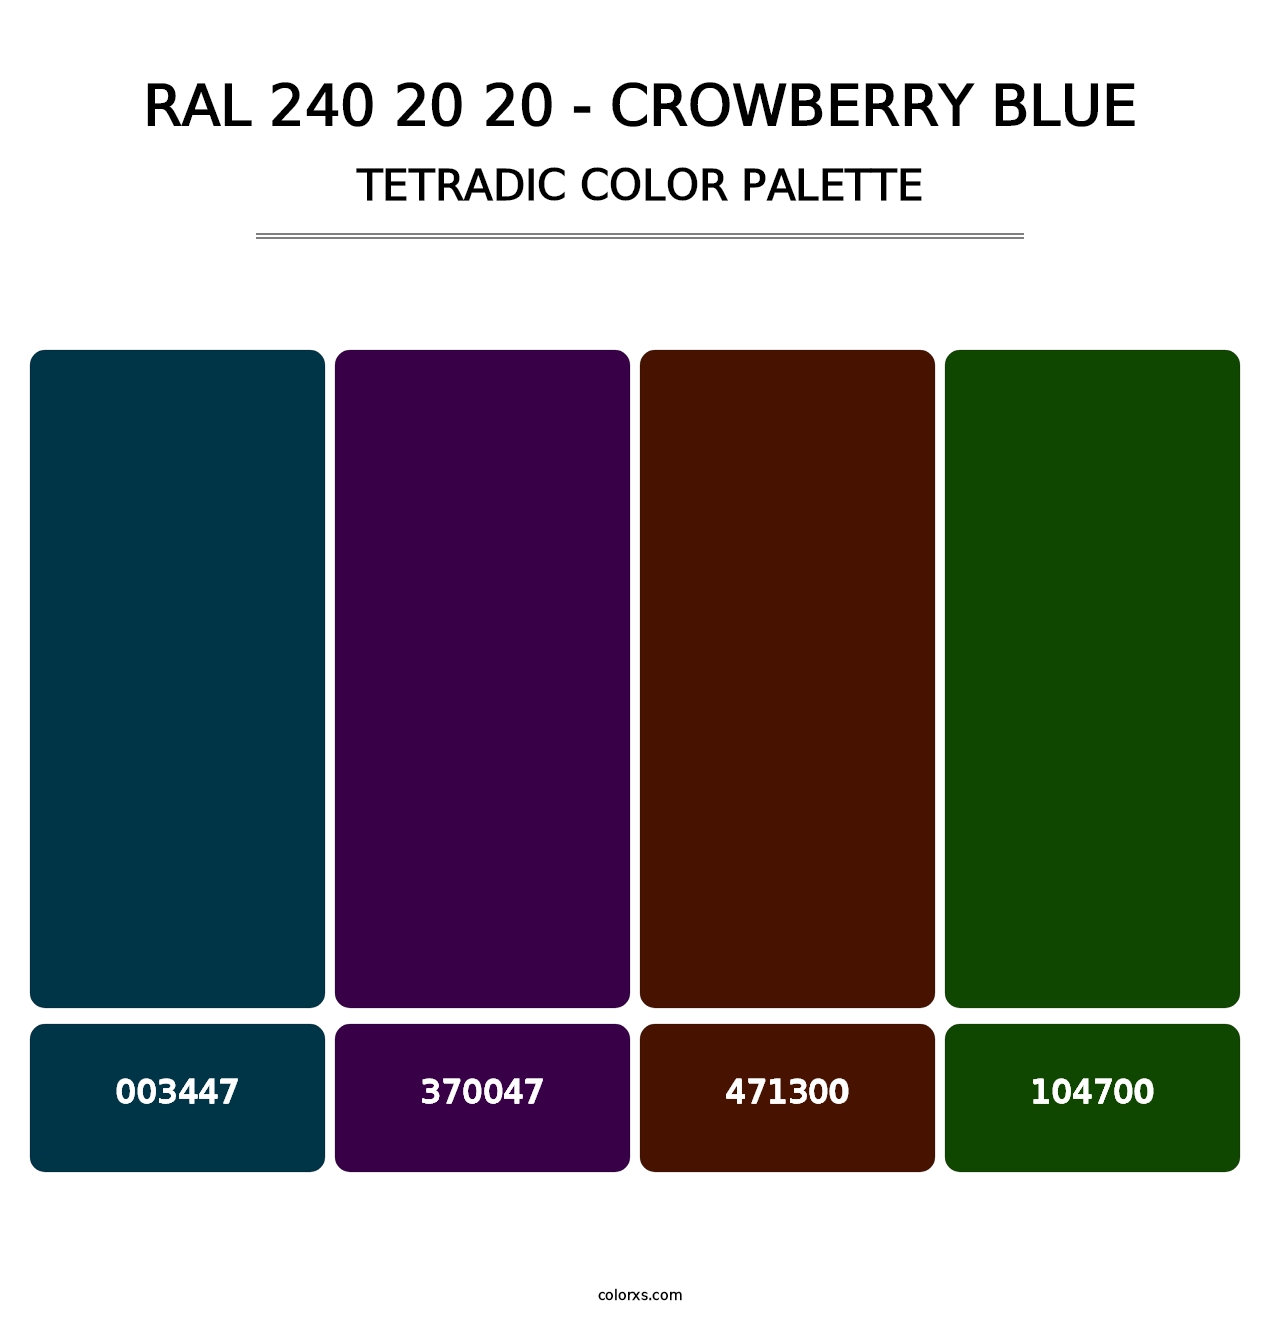 RAL 240 20 20 - Crowberry Blue - Tetradic Color Palette